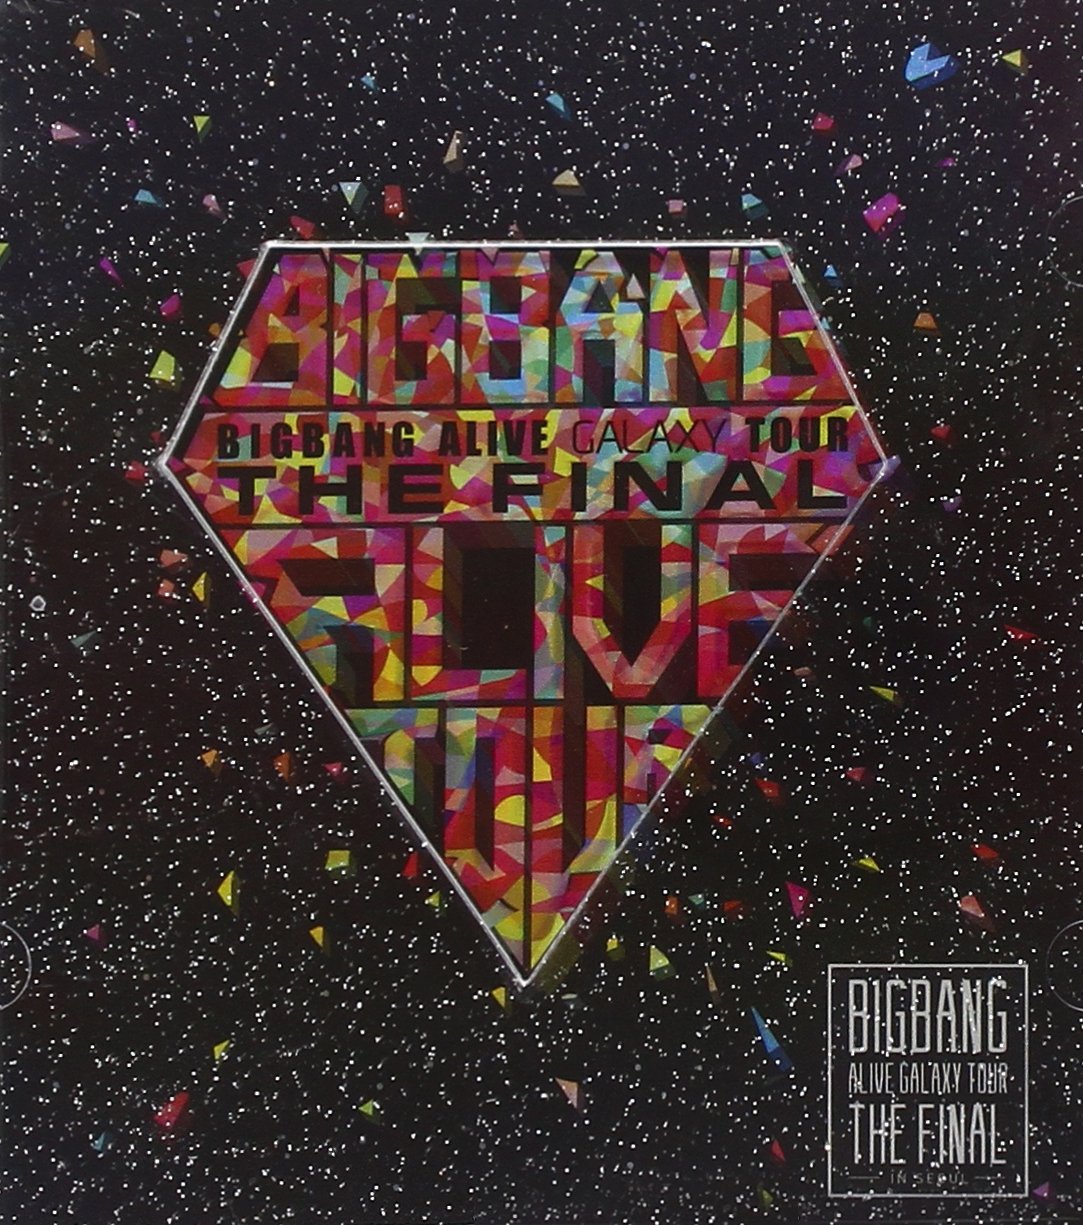 2013 BIGBANG Alive Galaxy Tour Live [The Final in Seoul] (2CD) (限定版)(韓国盤)